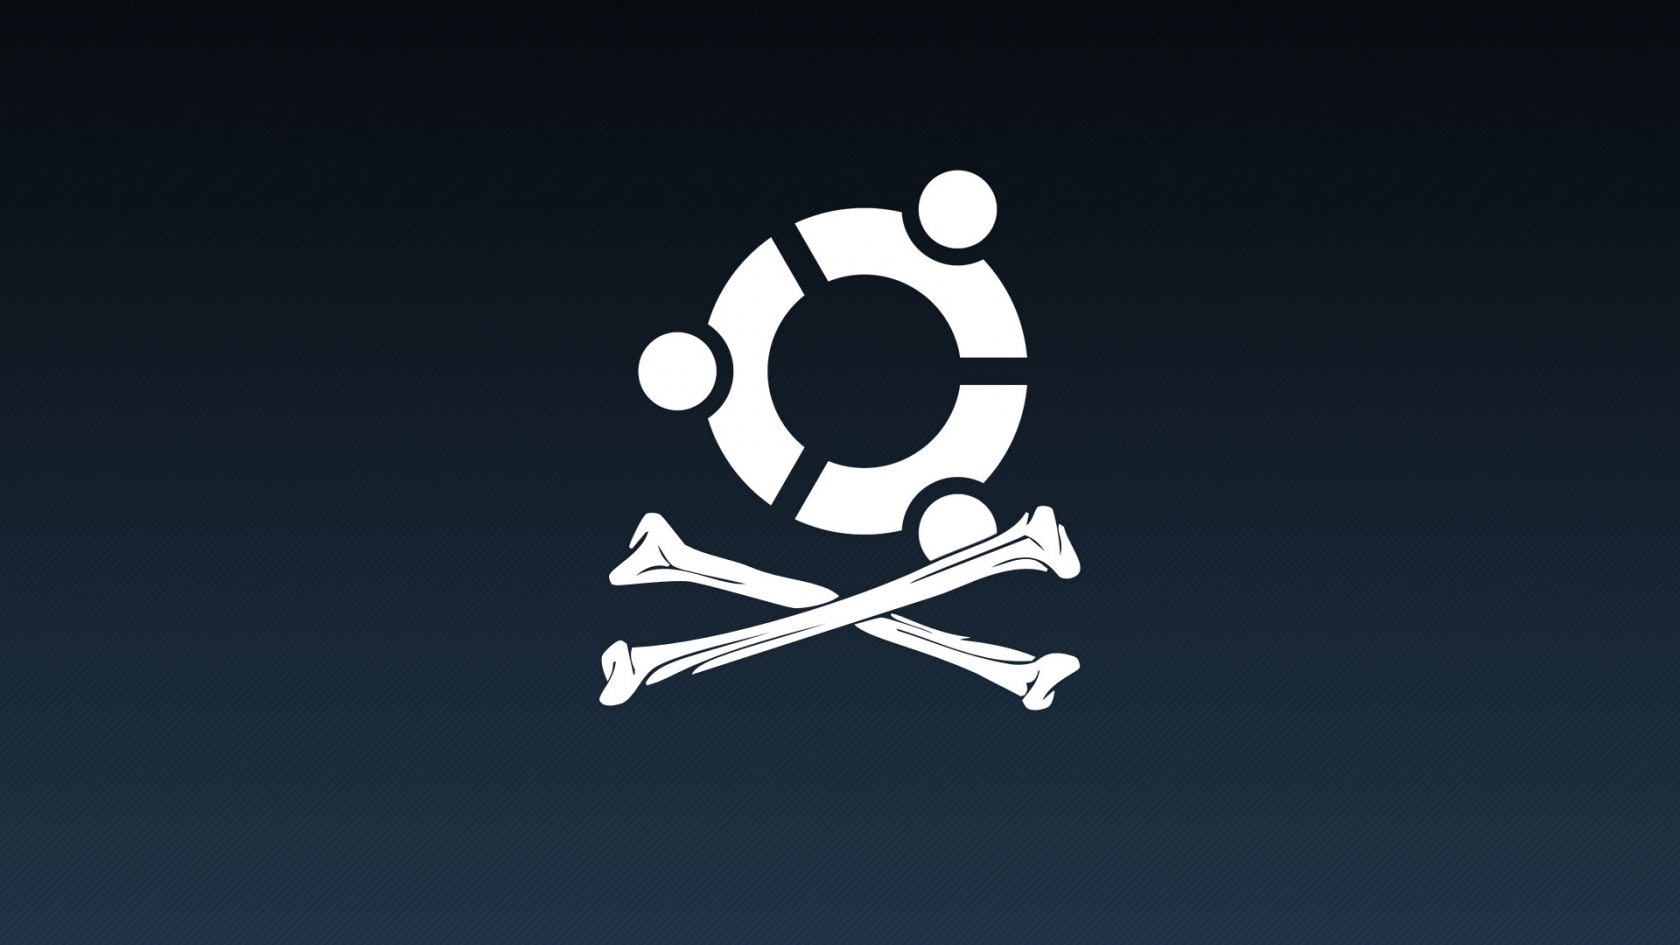 Pirate Ubuntu for 1680 x 945 HDTV resolution